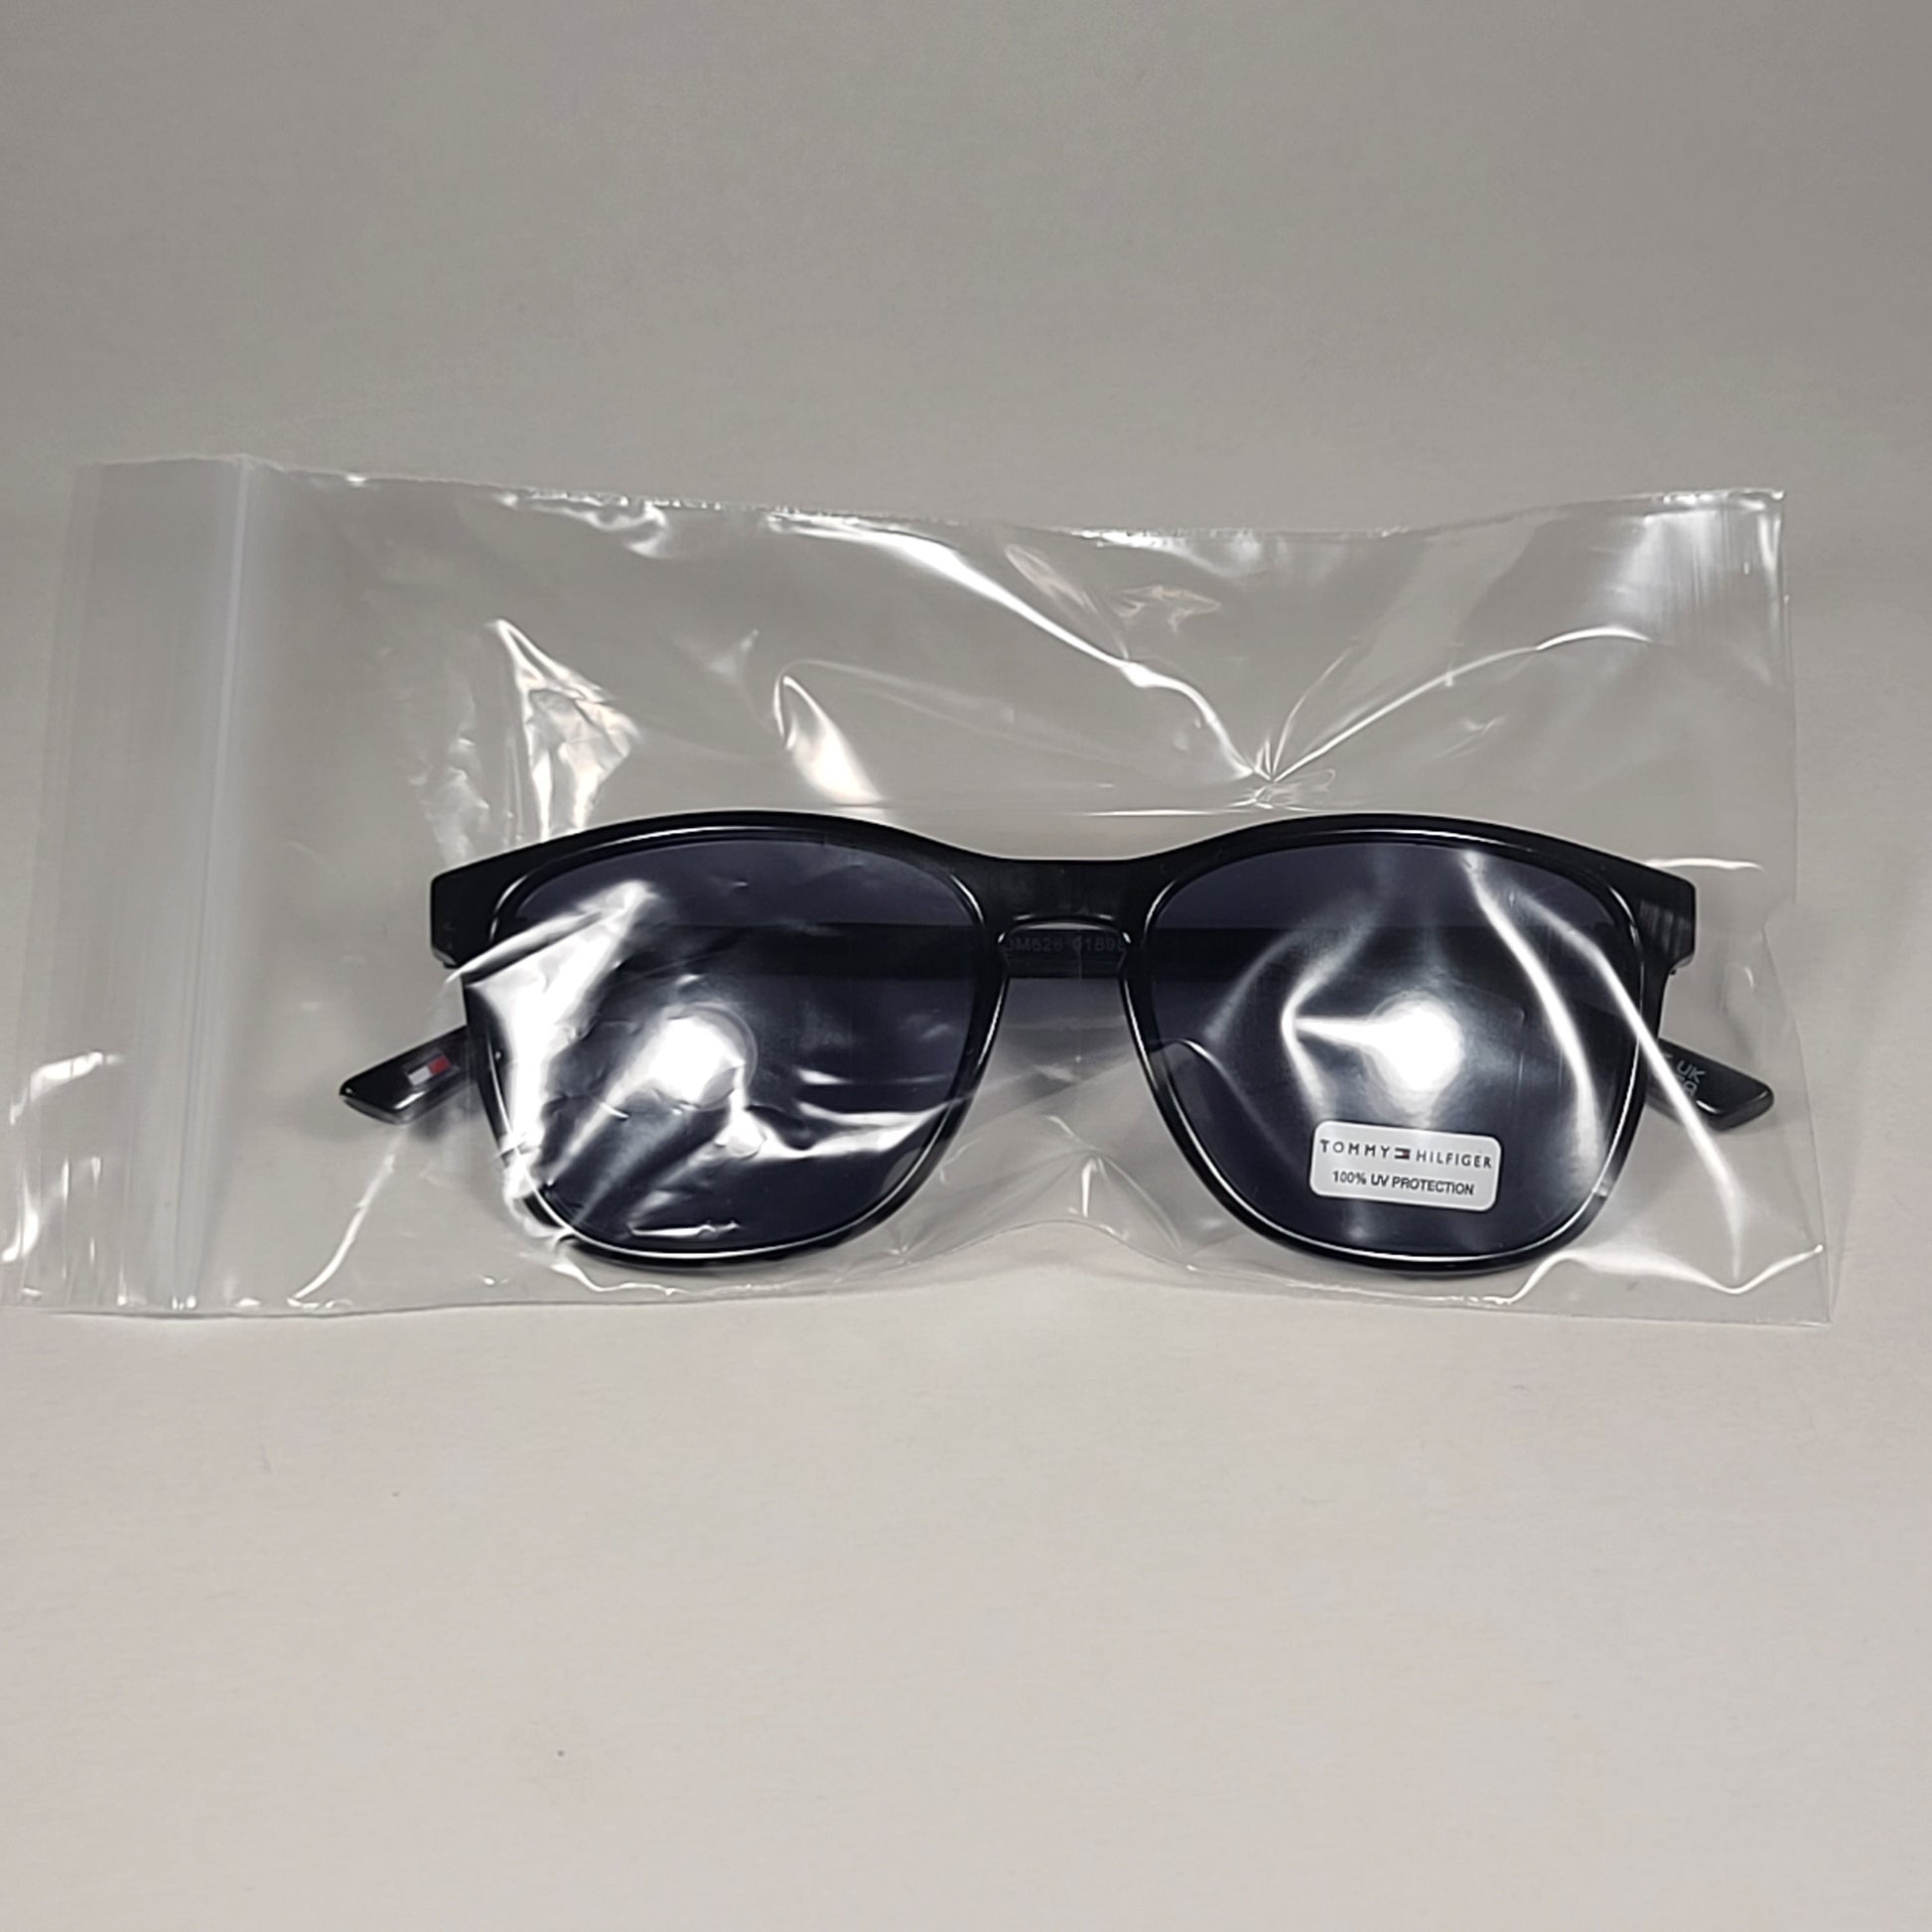 Tommy Hilfiger Moro MP OM626 Keyhole Sunglasses Black Frame Gray Lens - Sunglasses